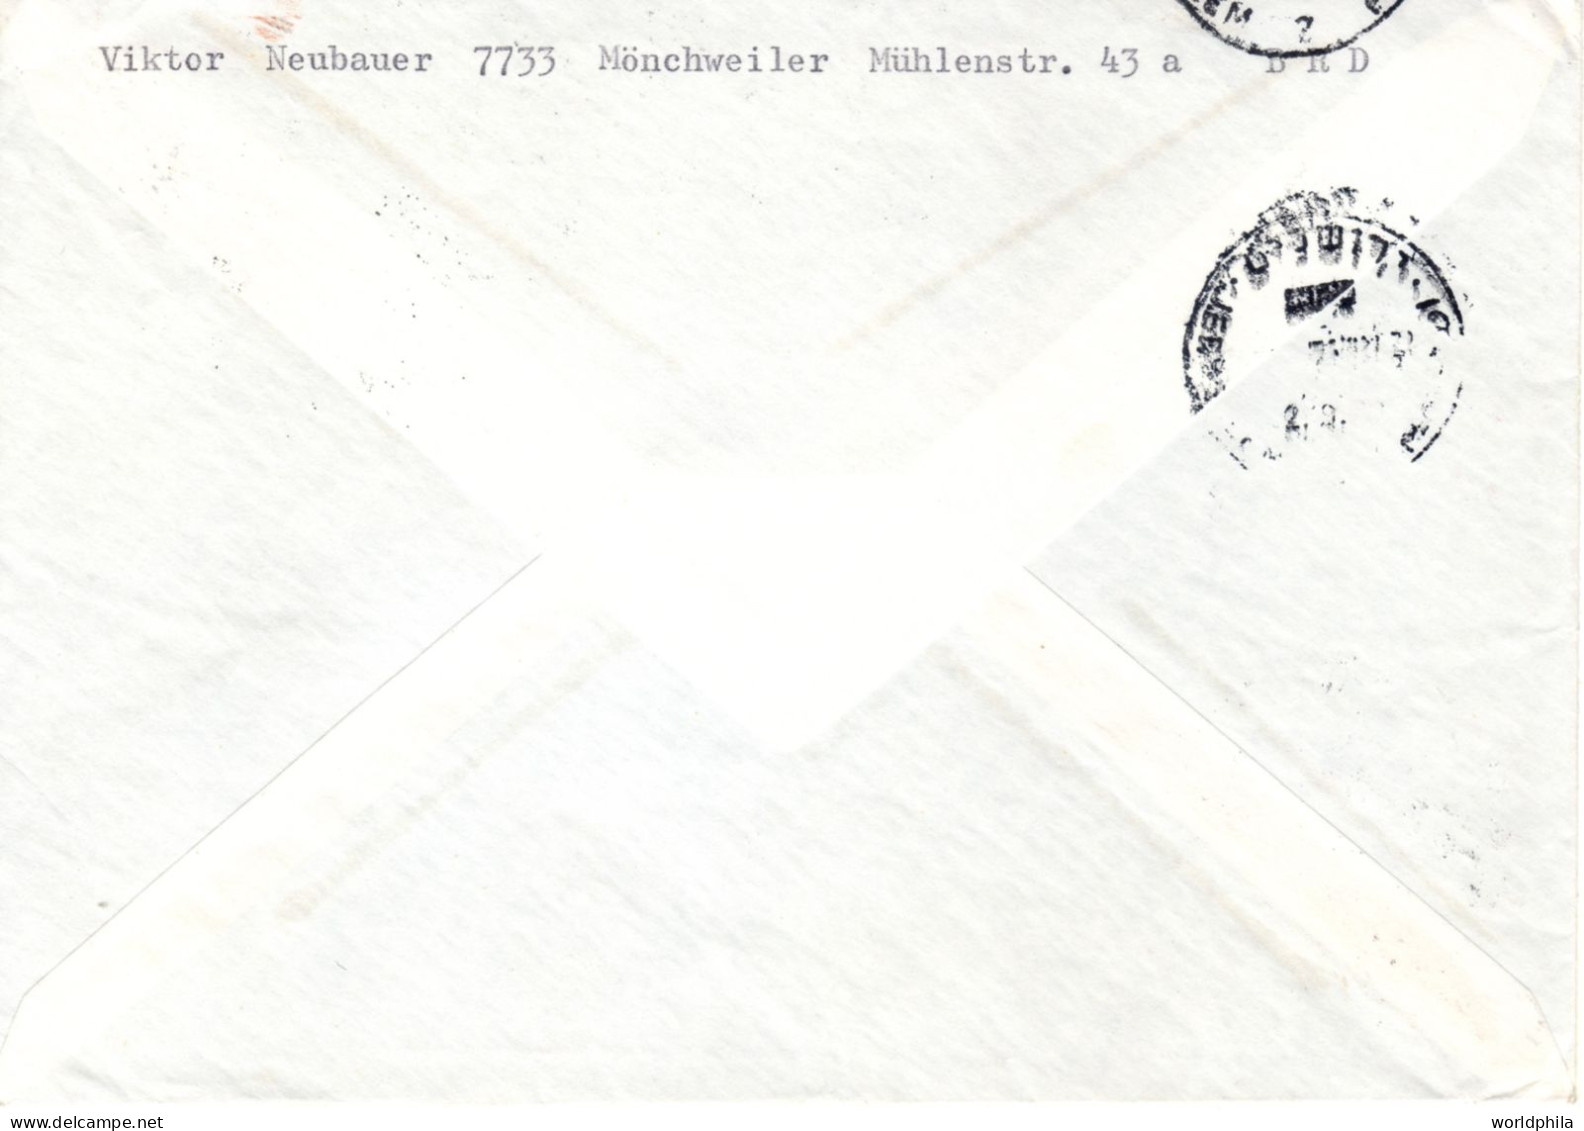 Deutschland To Israel 1972 Olympic Games Mi#624-7 Full Set Registered Mailed Cover IV - Sommer 1972: München